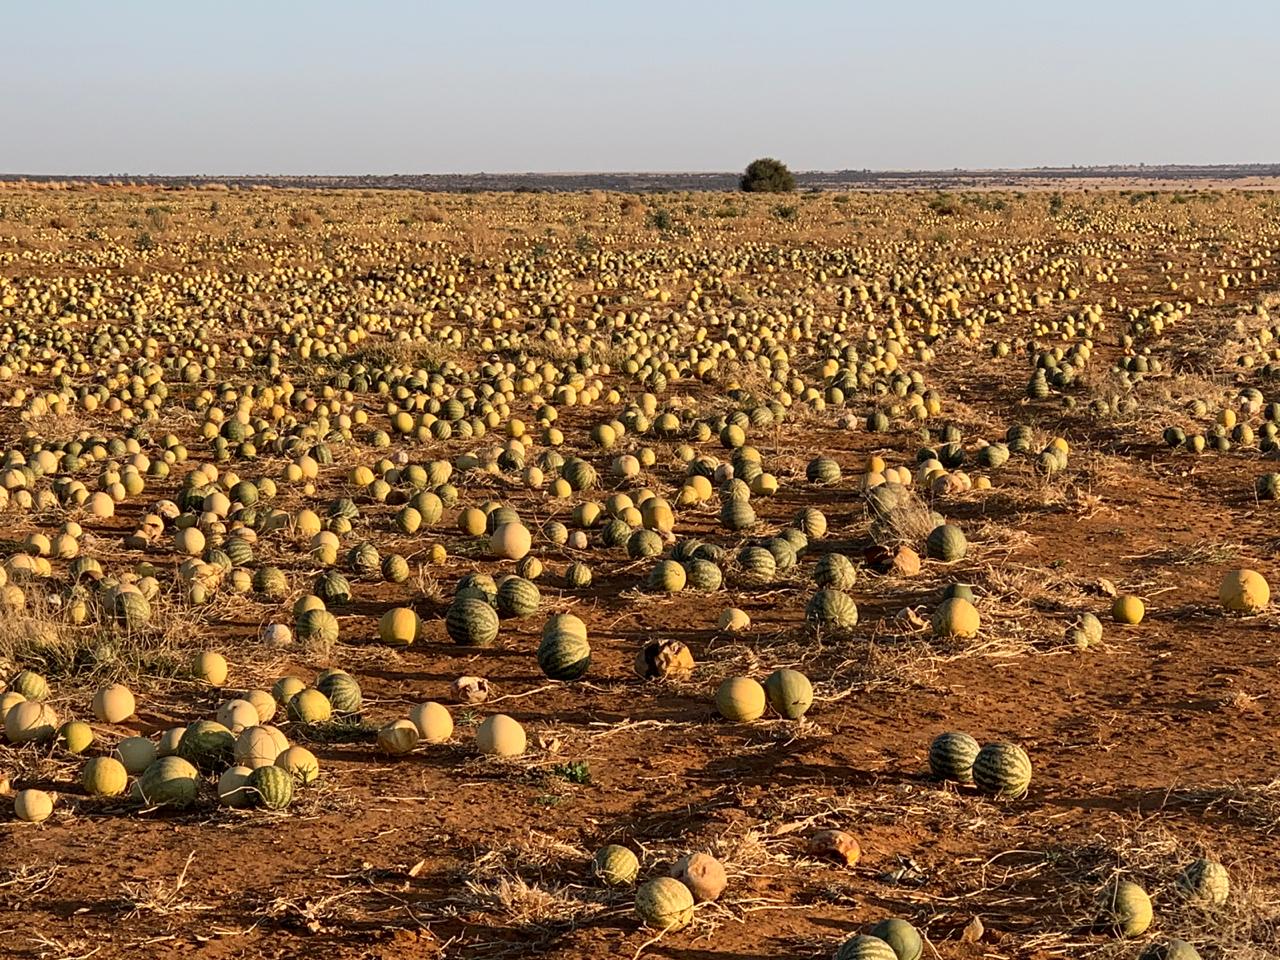 Kalahari melons growing in desert-like conditions